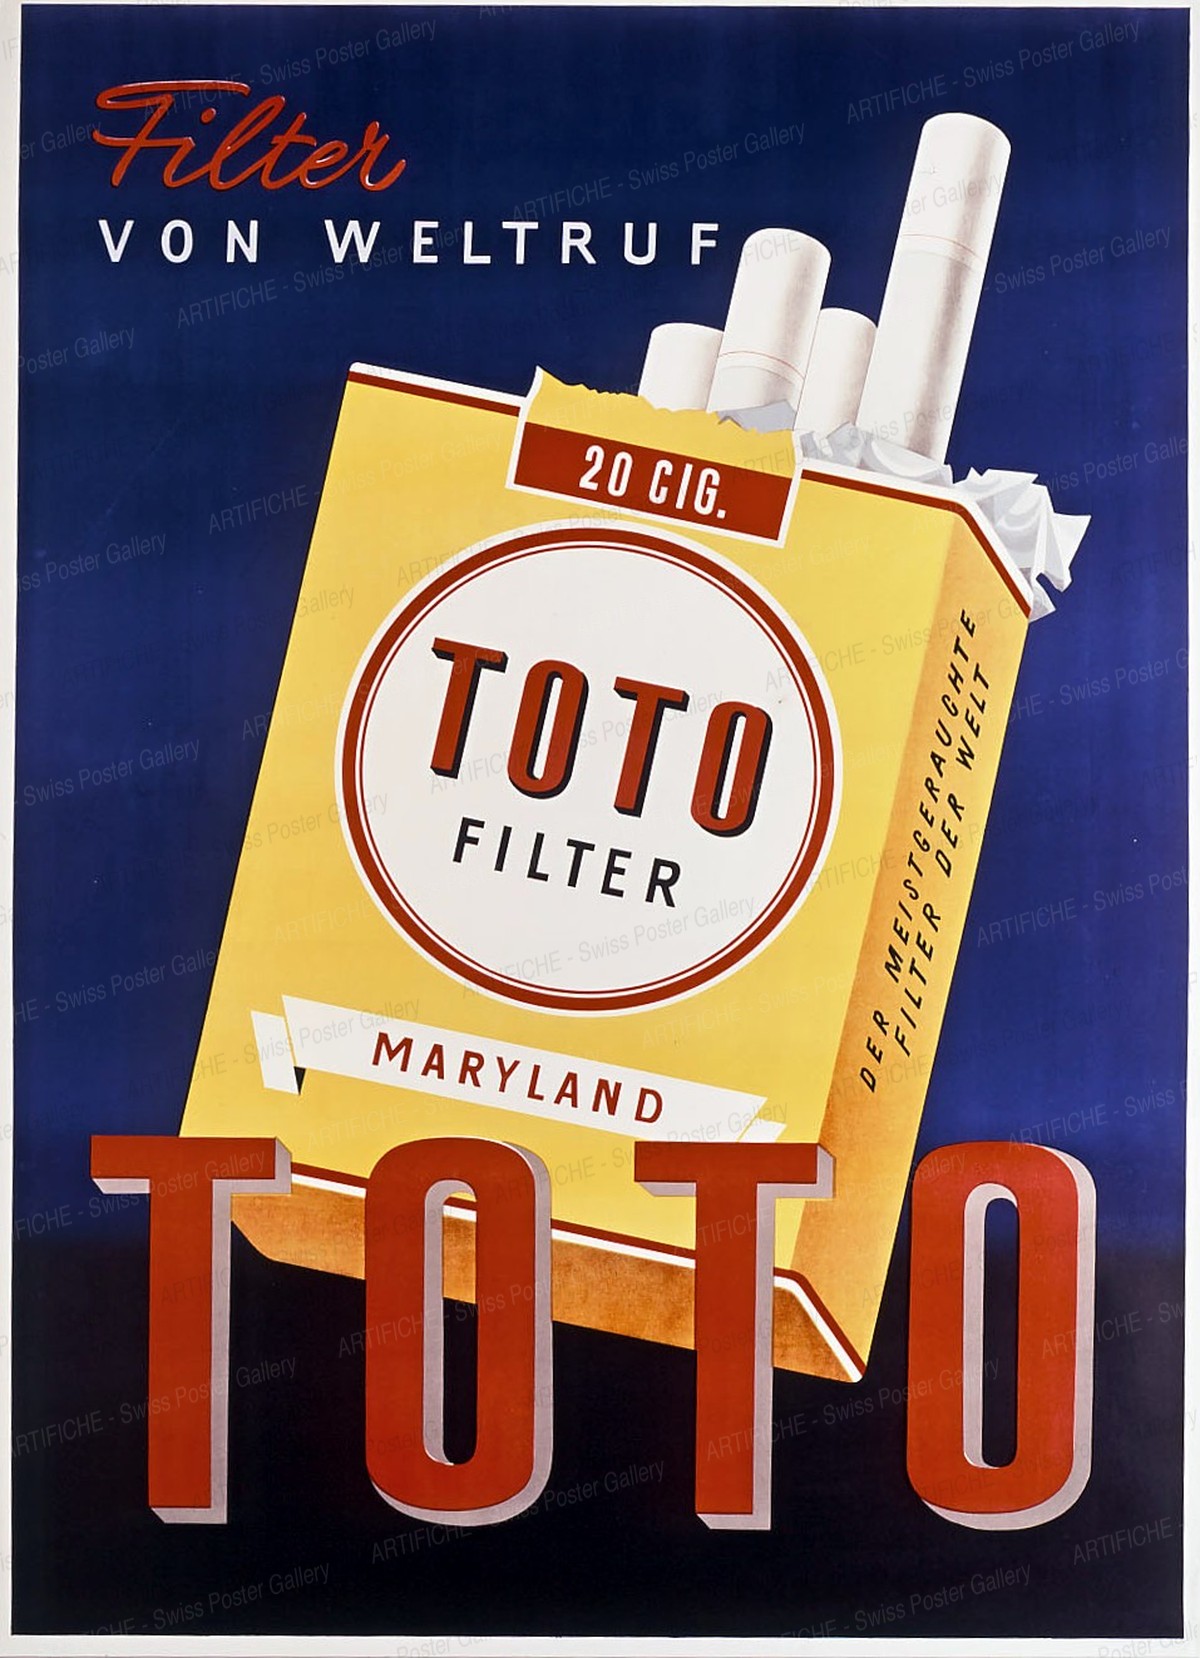 TOTO Filer Maryland – Tobacco, Artist unknown